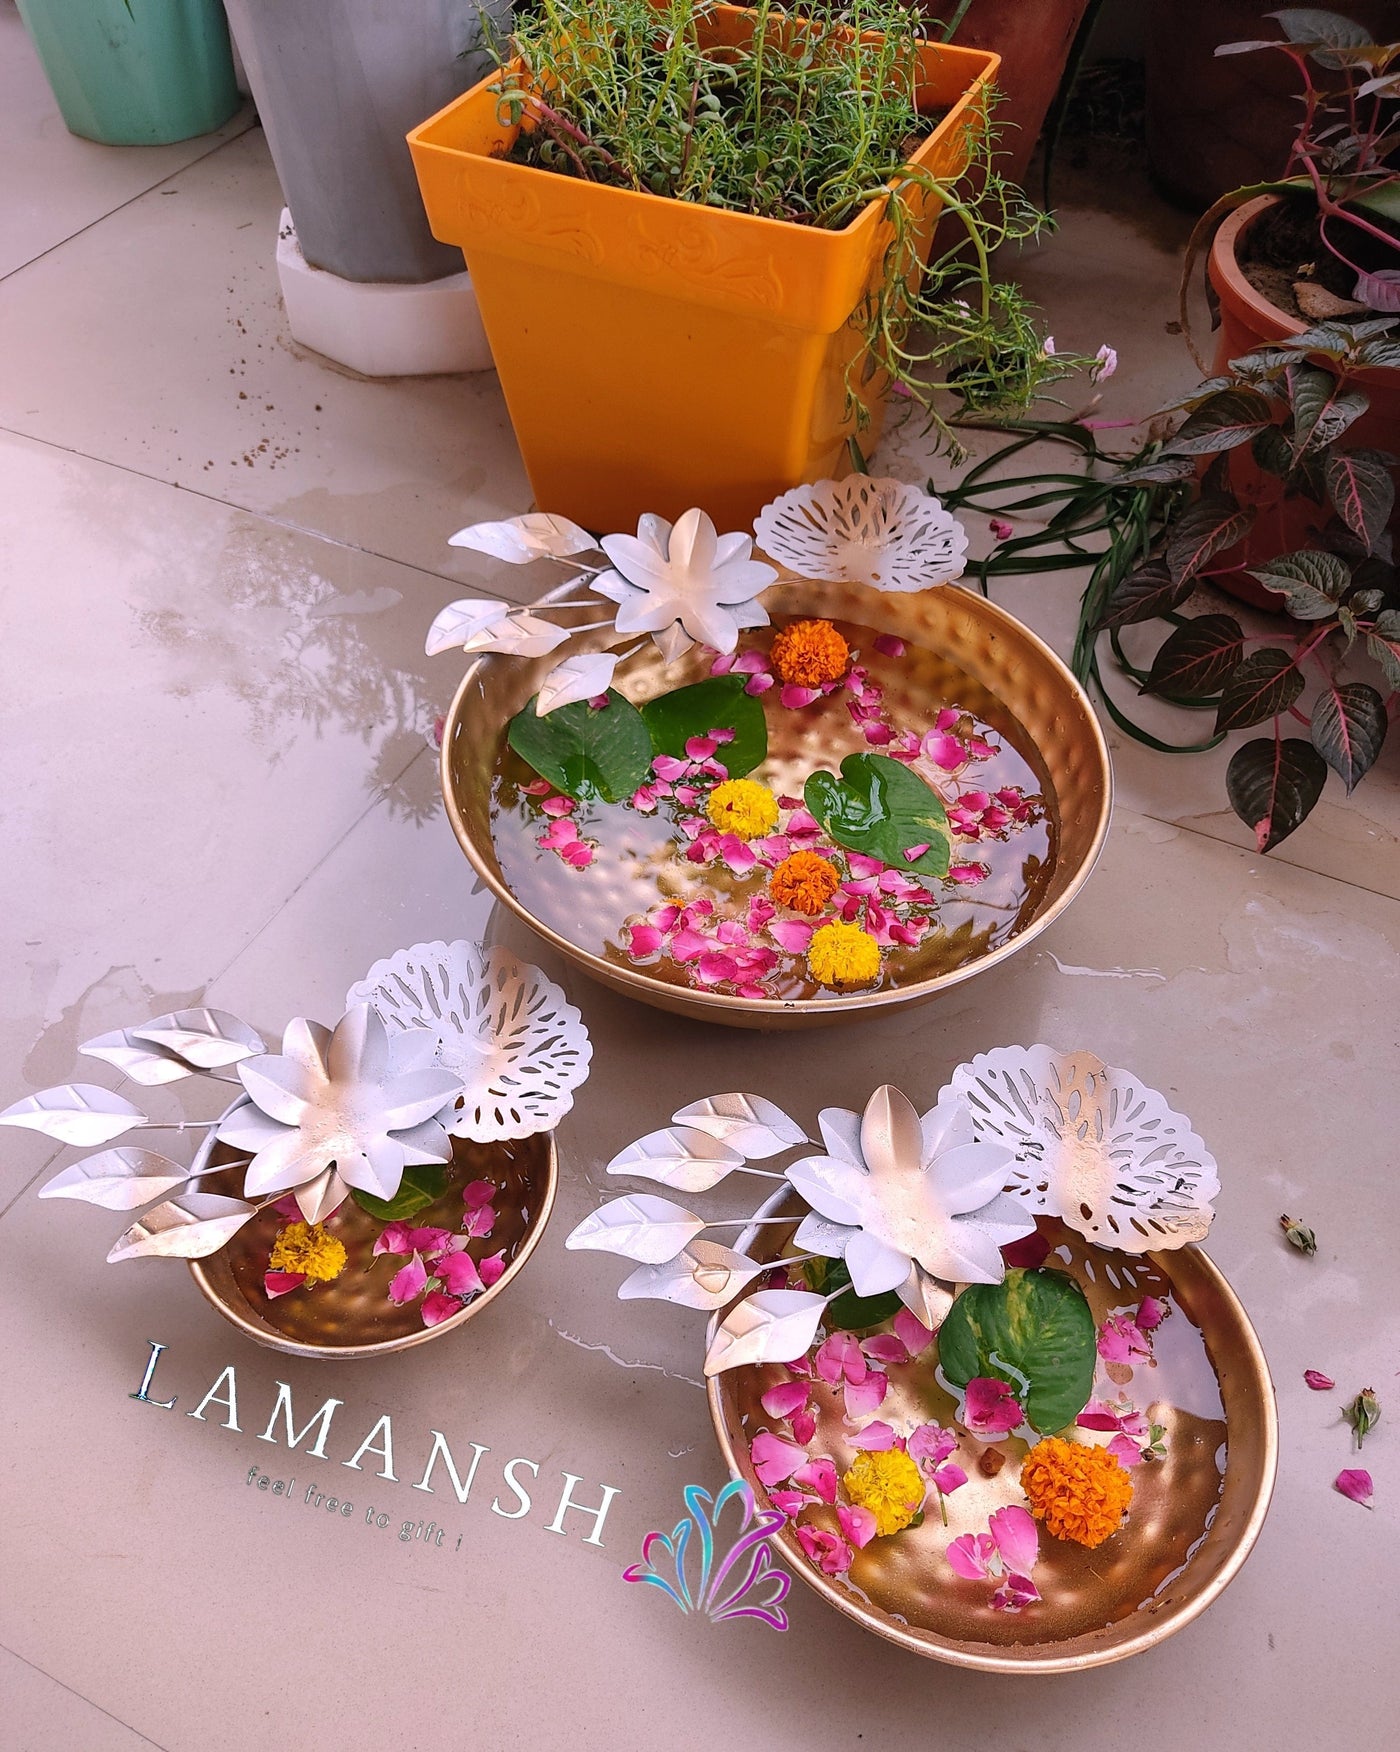 Lamansh urli LAMANSH® Floral Metal Handcrafted Bowl Urli for Decoration ✨ Golden Flower work Metal water bowl / Urli for ✨Festival Diwali & Navratri decoration